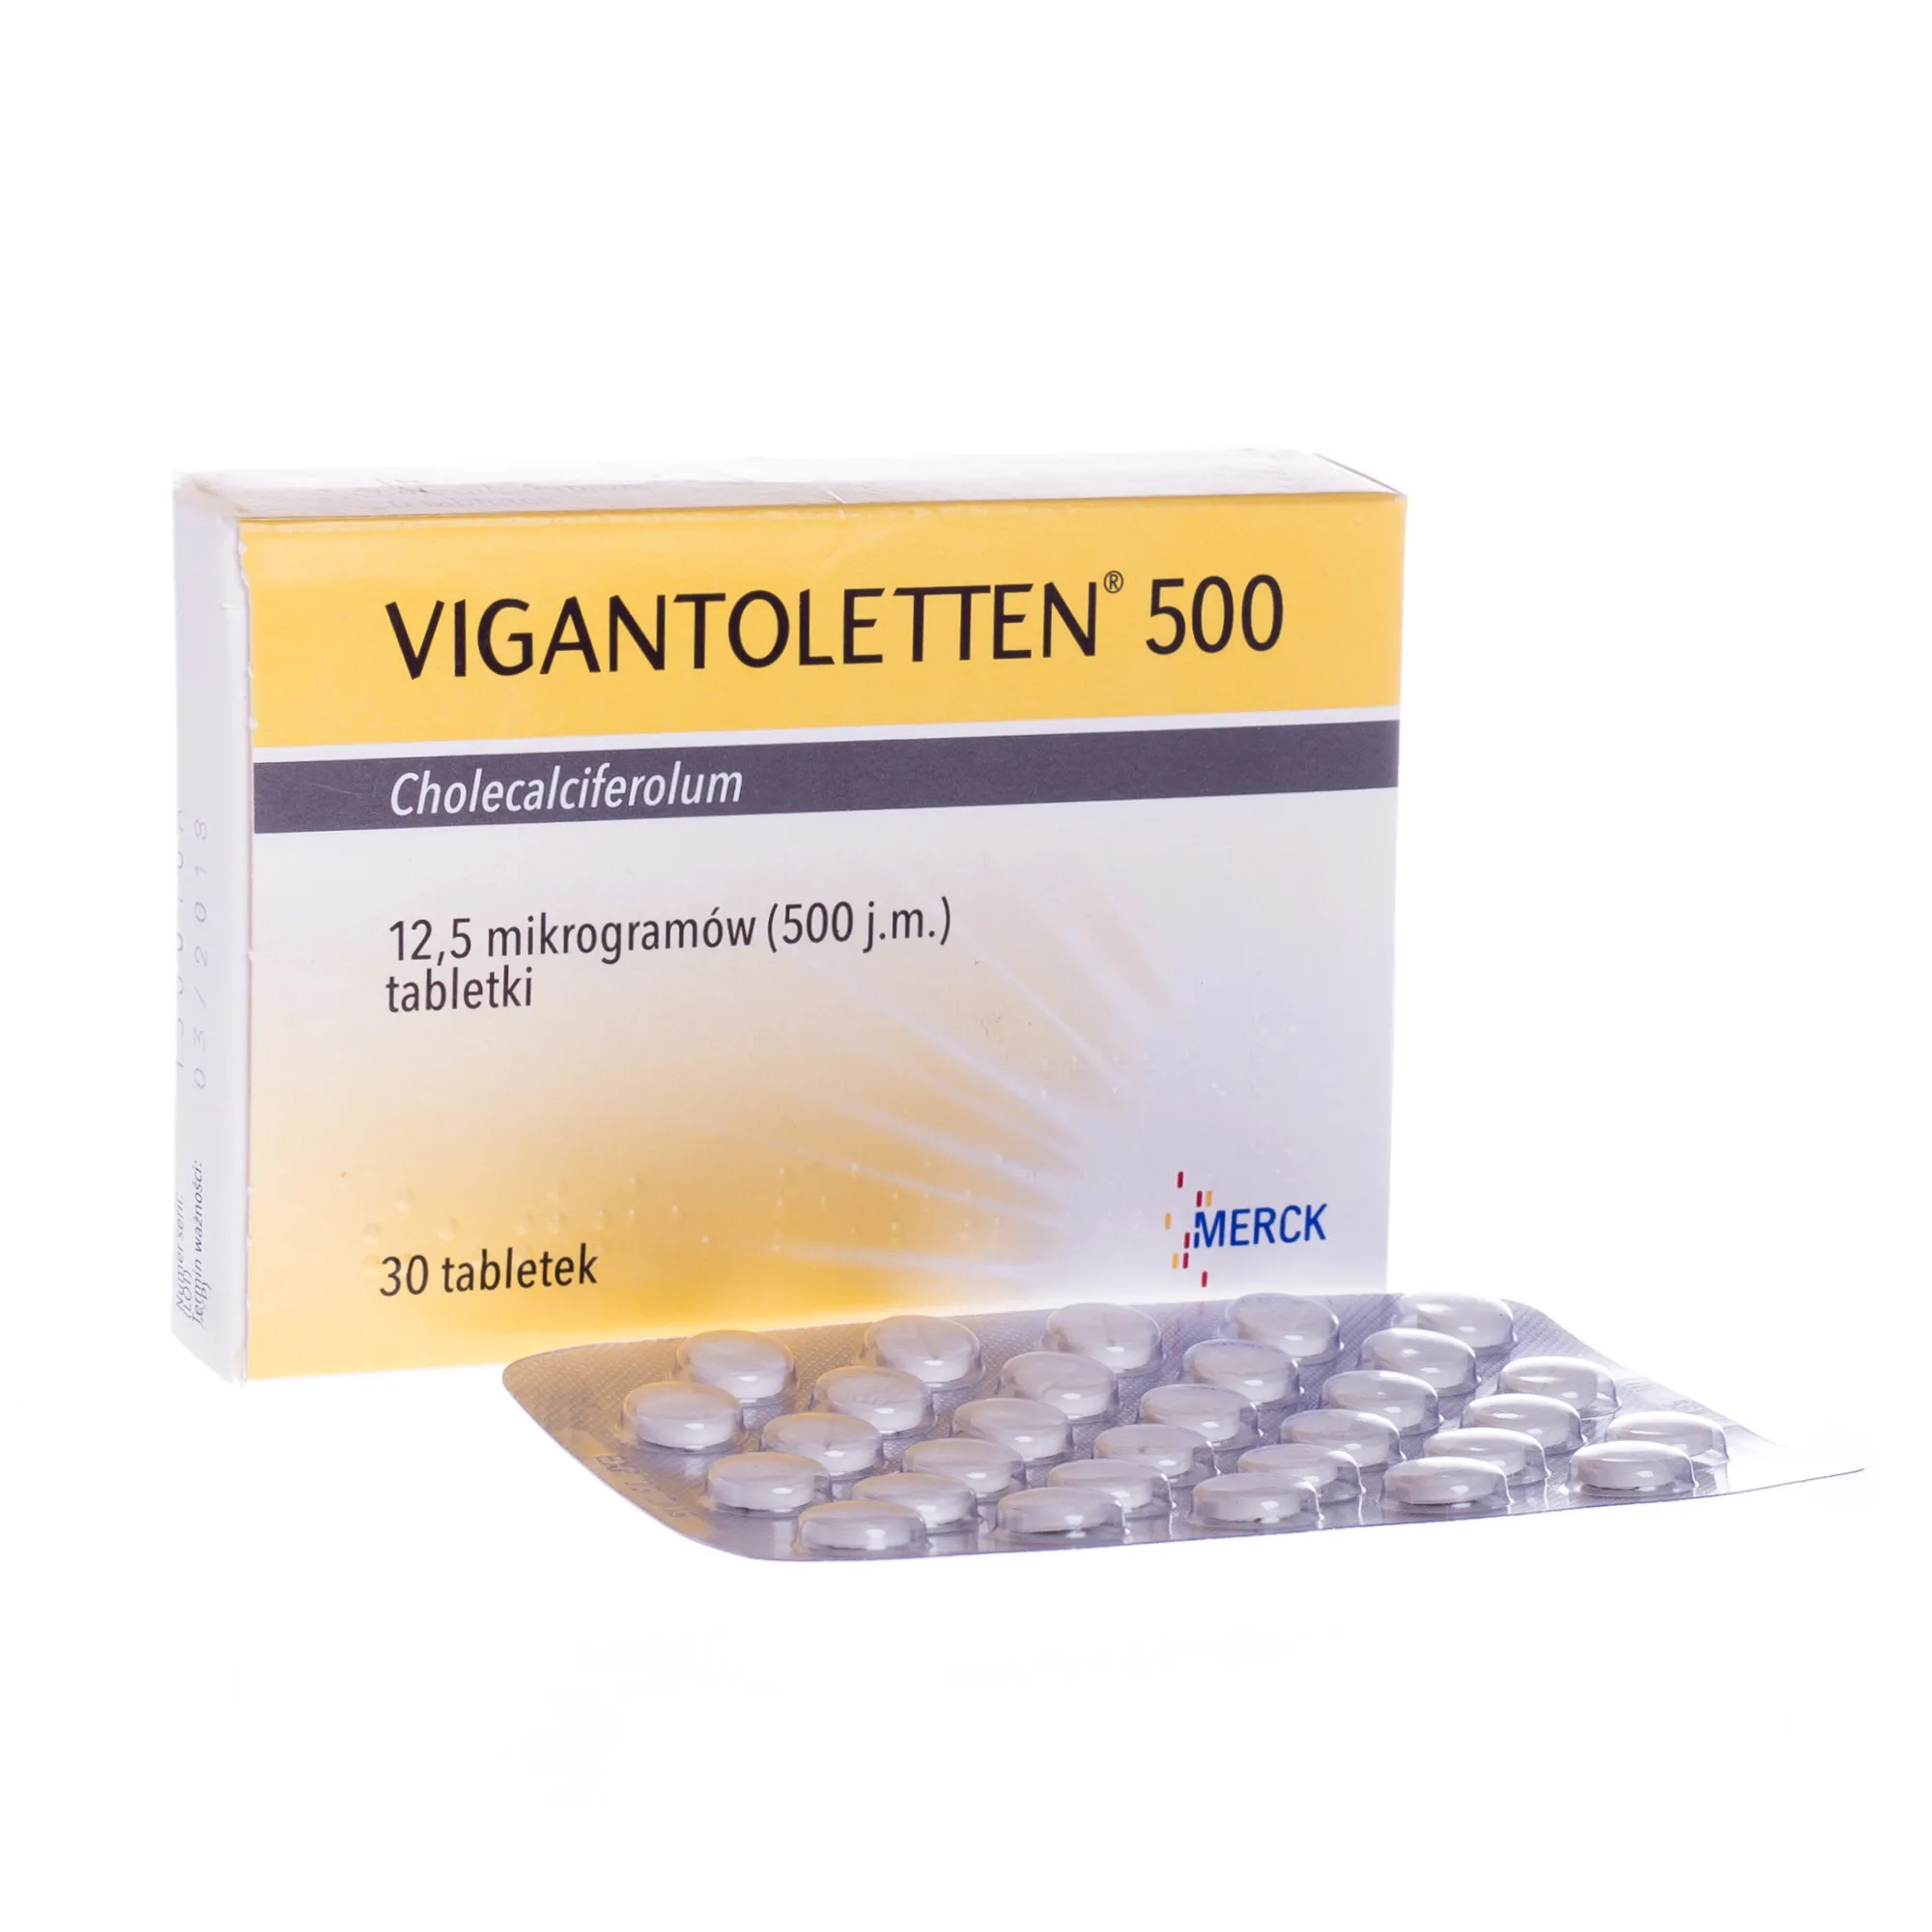 Vigantoletten 500, 500 j.m. 30 tabletek